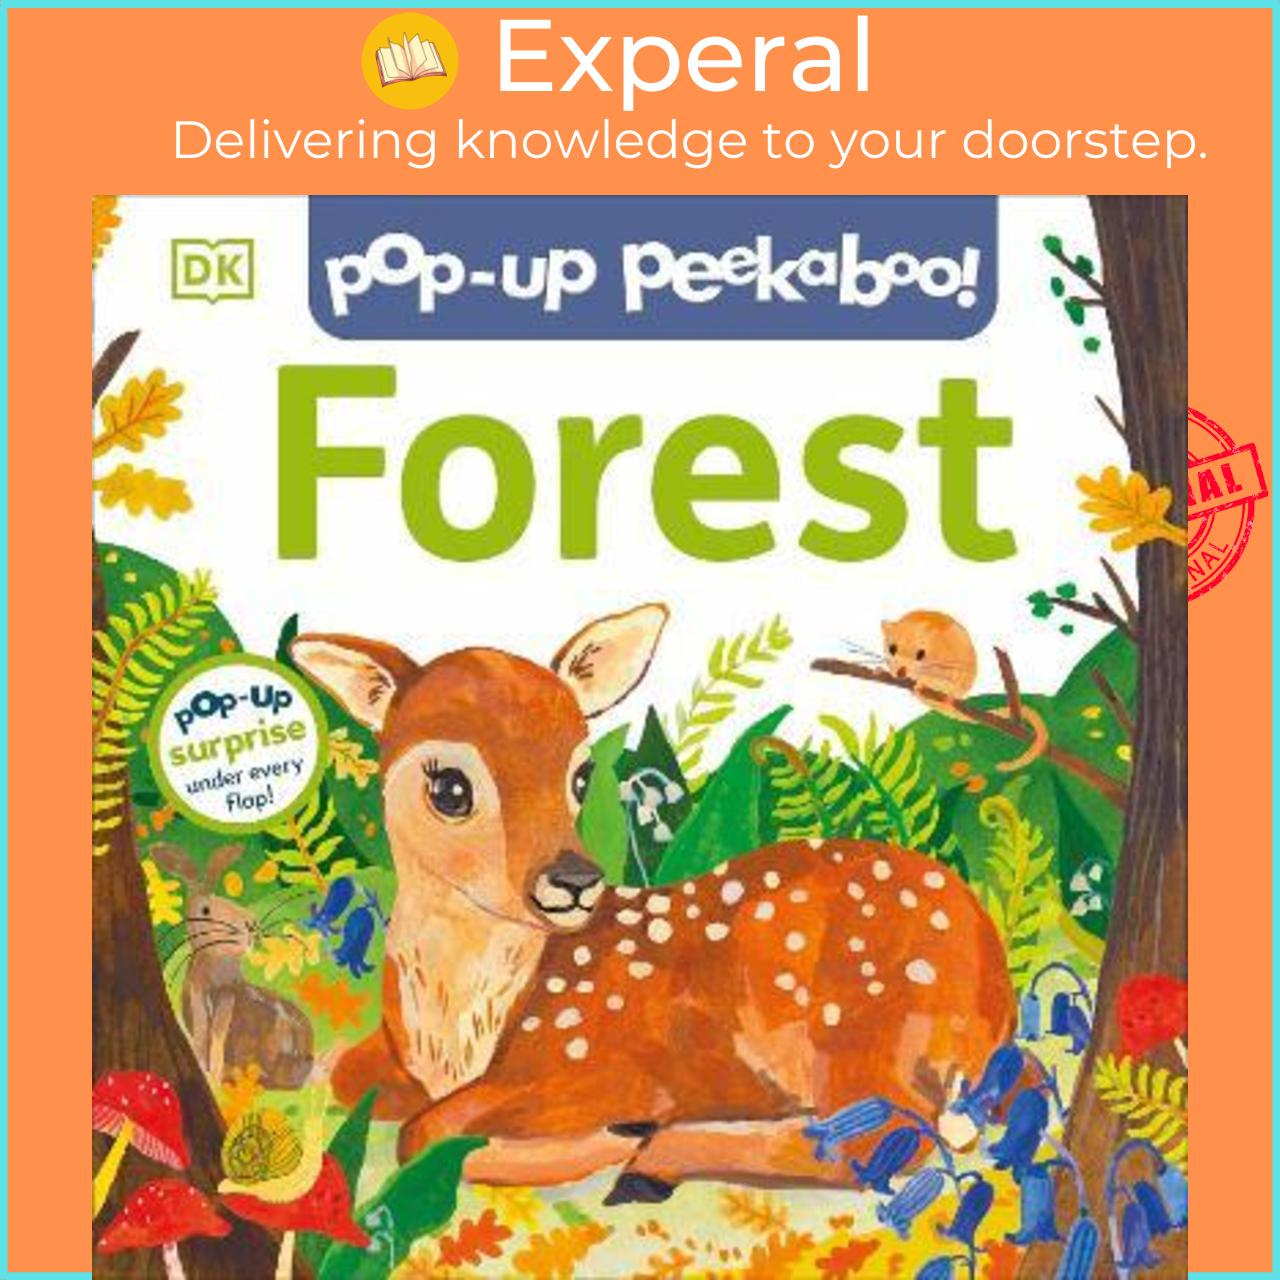 Hình ảnh Sách - Pop-Up Peekaboo! Forest : Pop-Up Surprise Under Every Flap! by DK (UK edition, paperback)